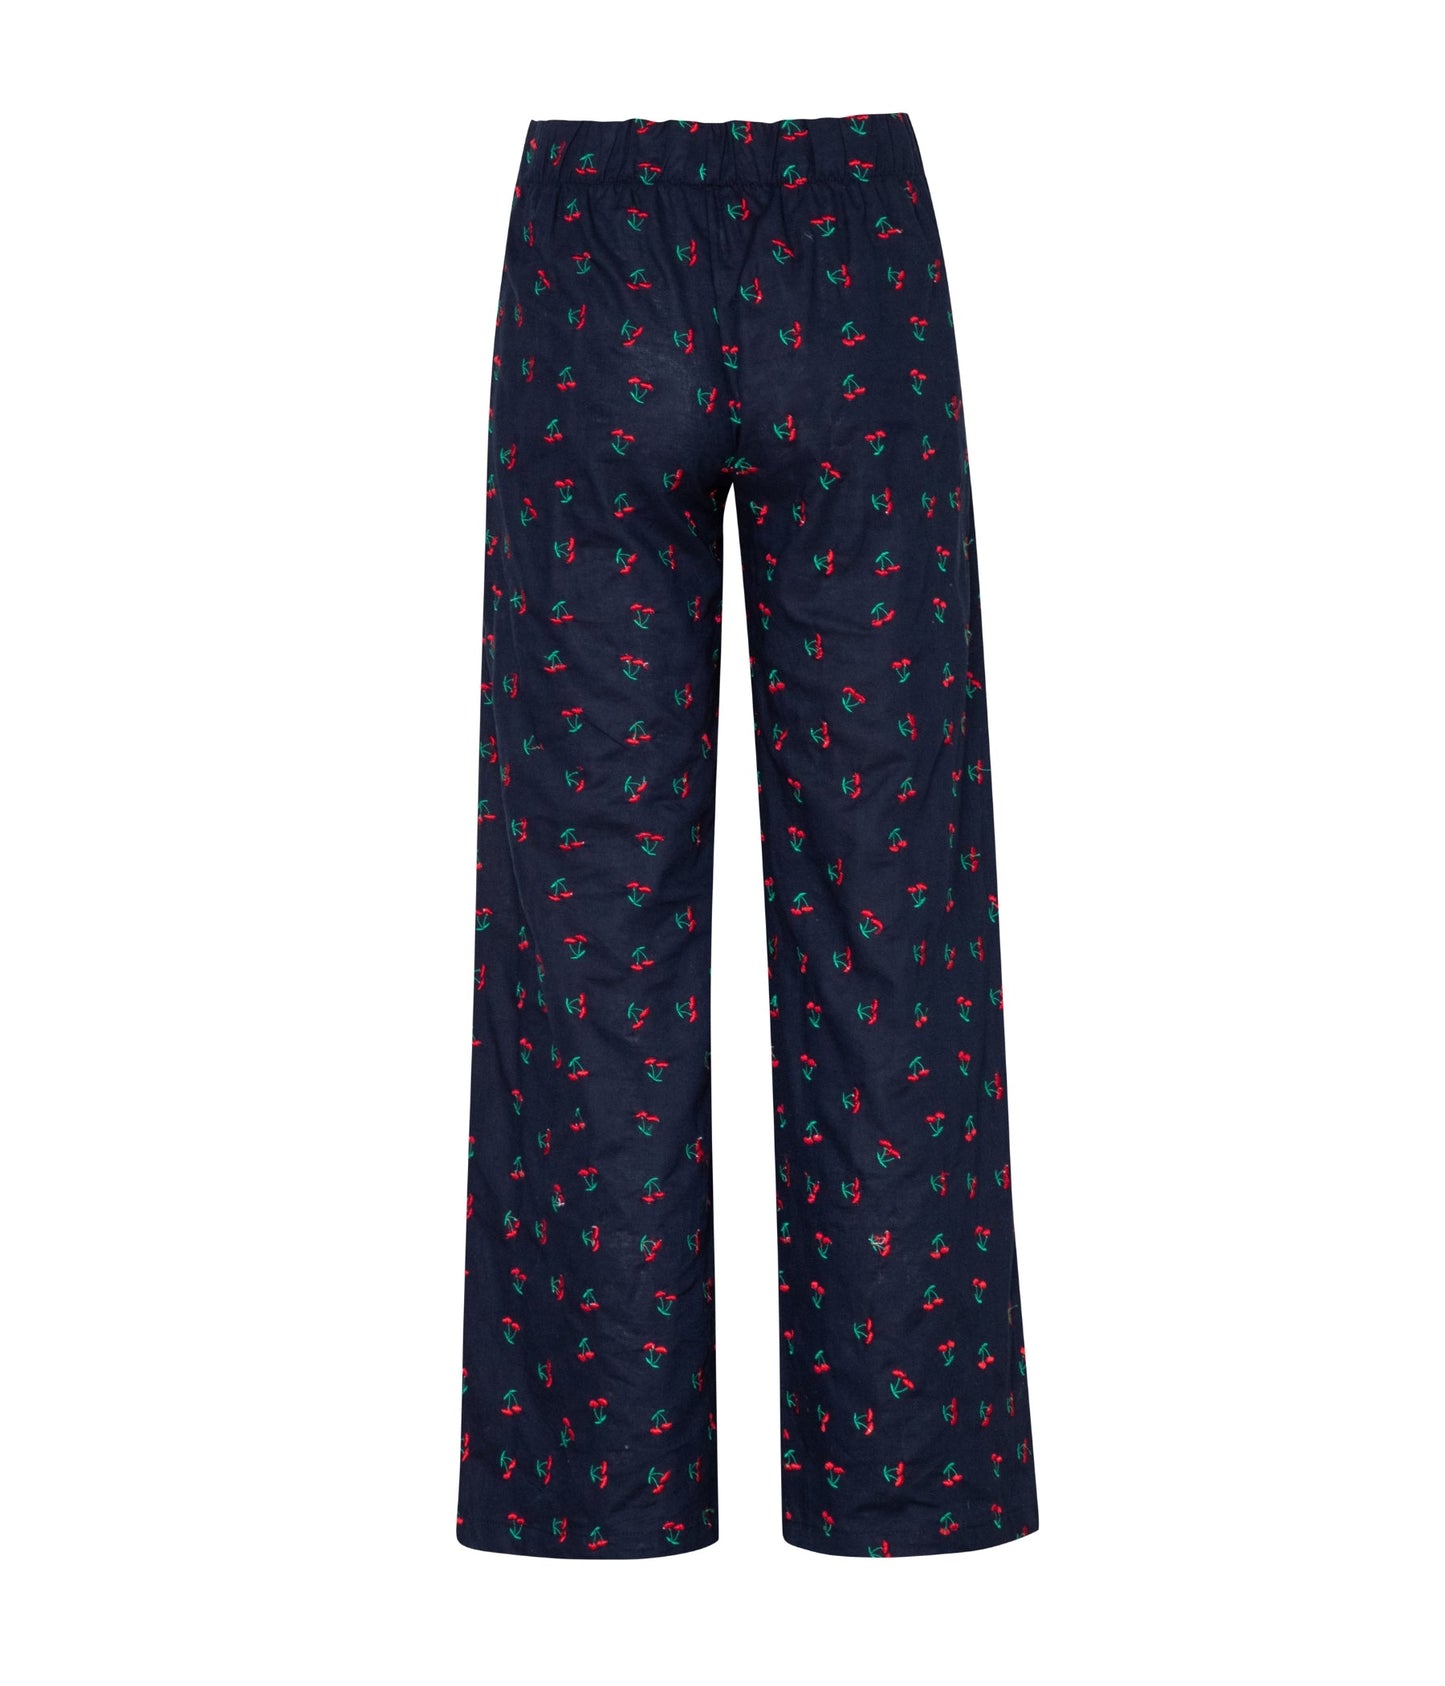 Verdelimon - Trousers - Boyfriend - Navy Linen Embroidered Cherriess - Back